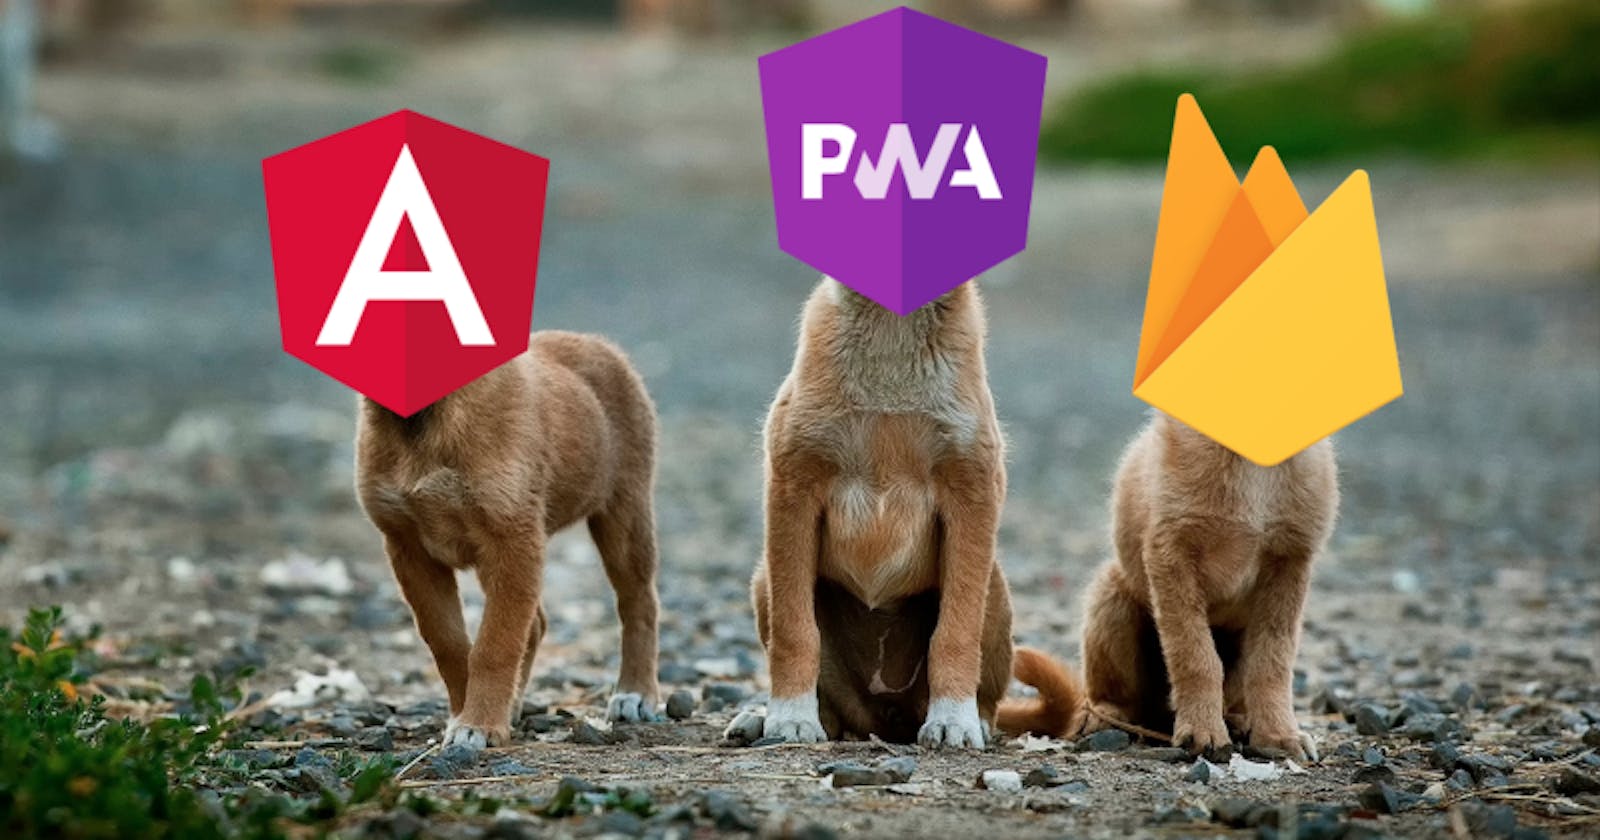 Build a production ready PWA with Angular and Firebase